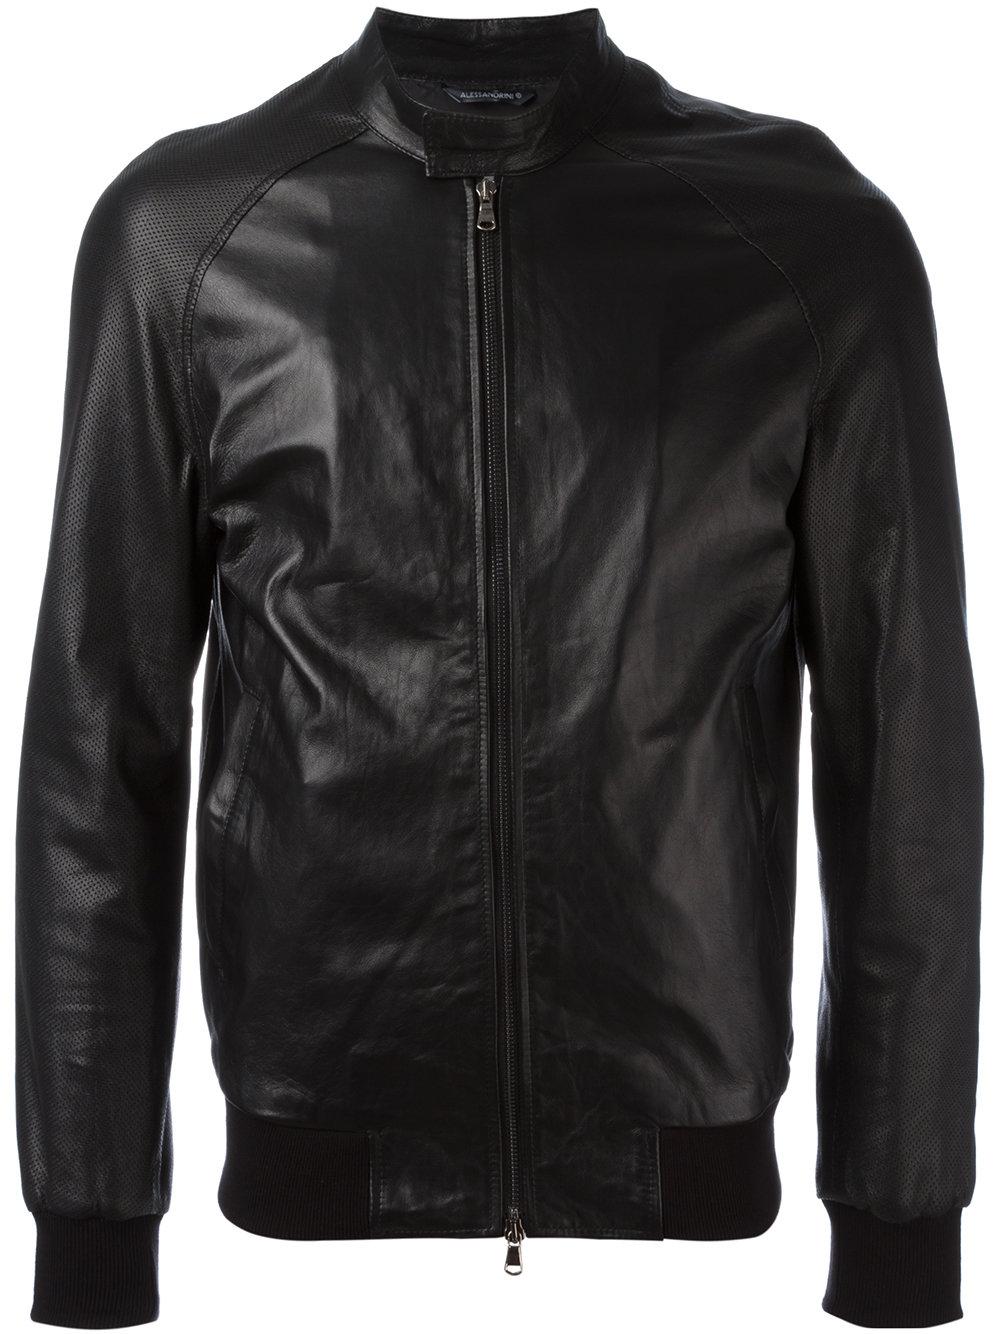 Lyst - Grey Daniele Alessandrini Zipped Jacket in Black for Men